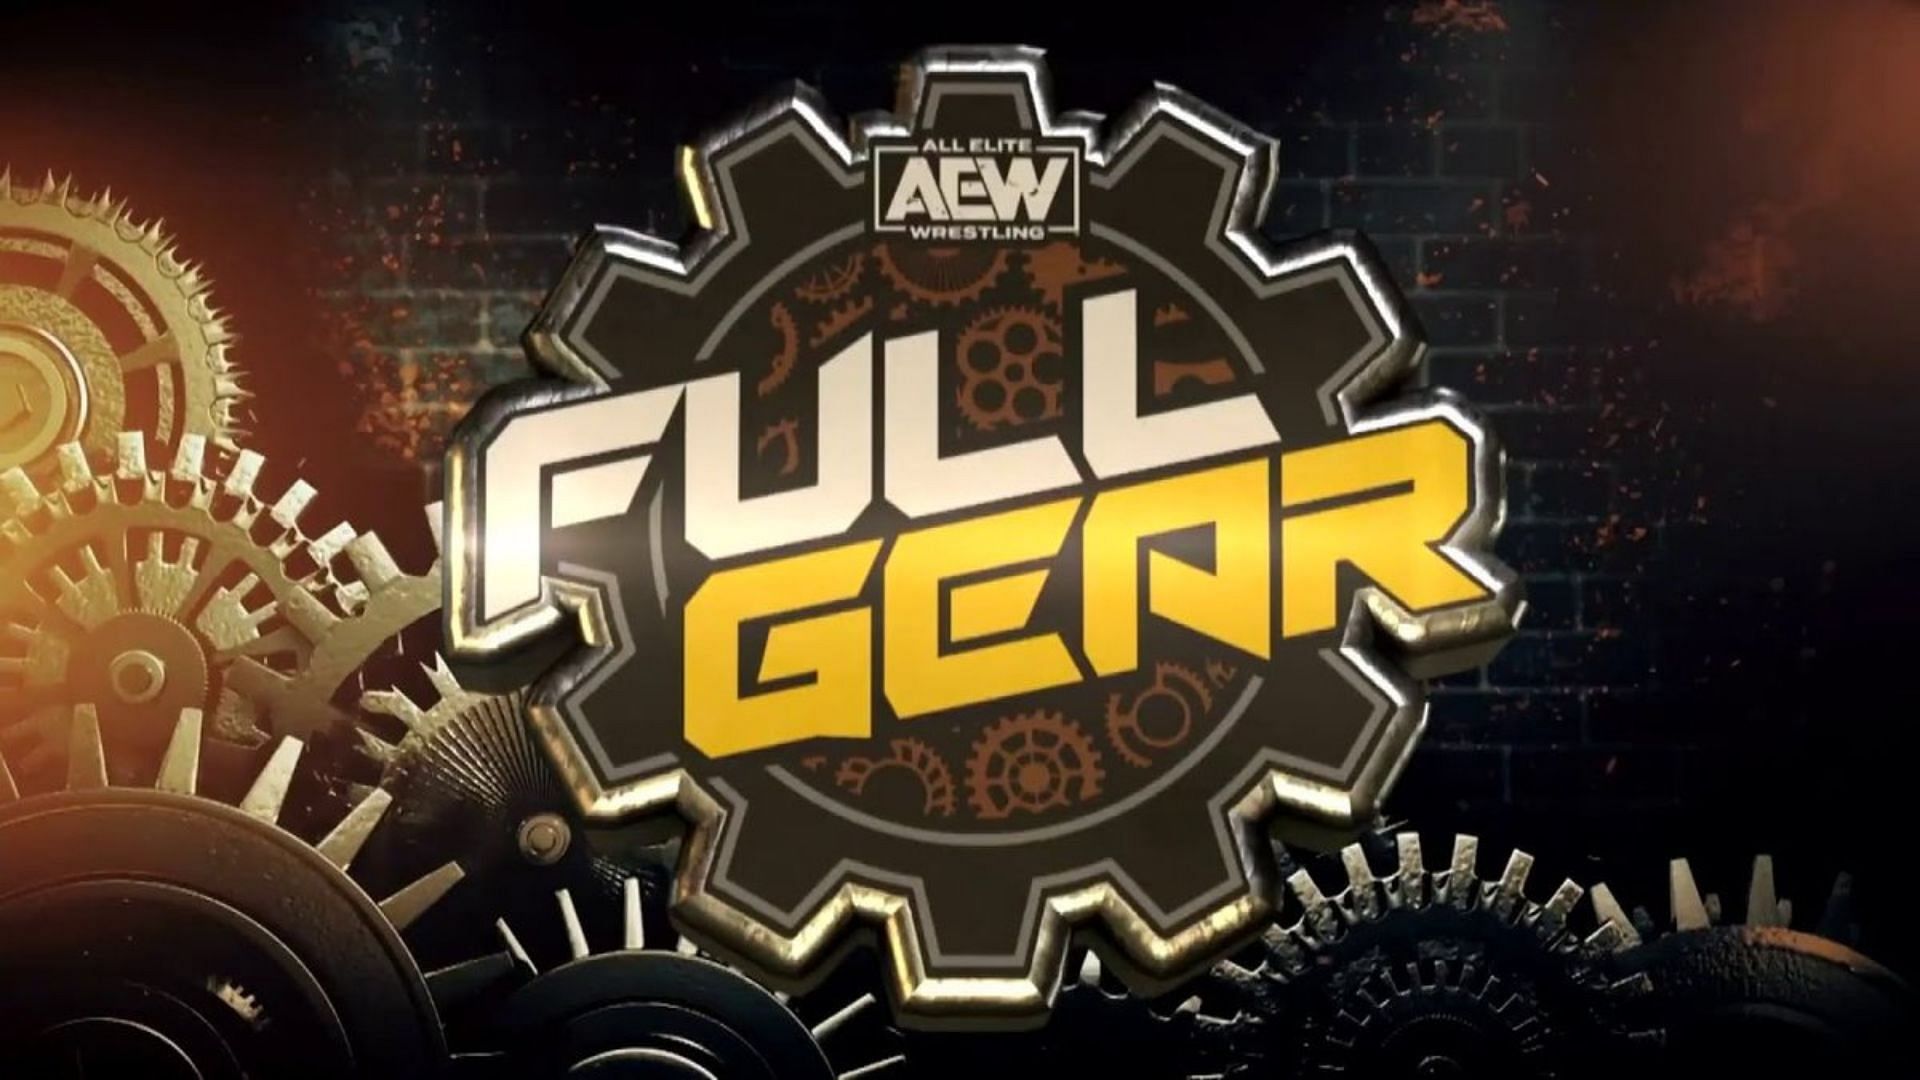 AEW Full Gear will take place on November 18th at the Kia Forum in LA